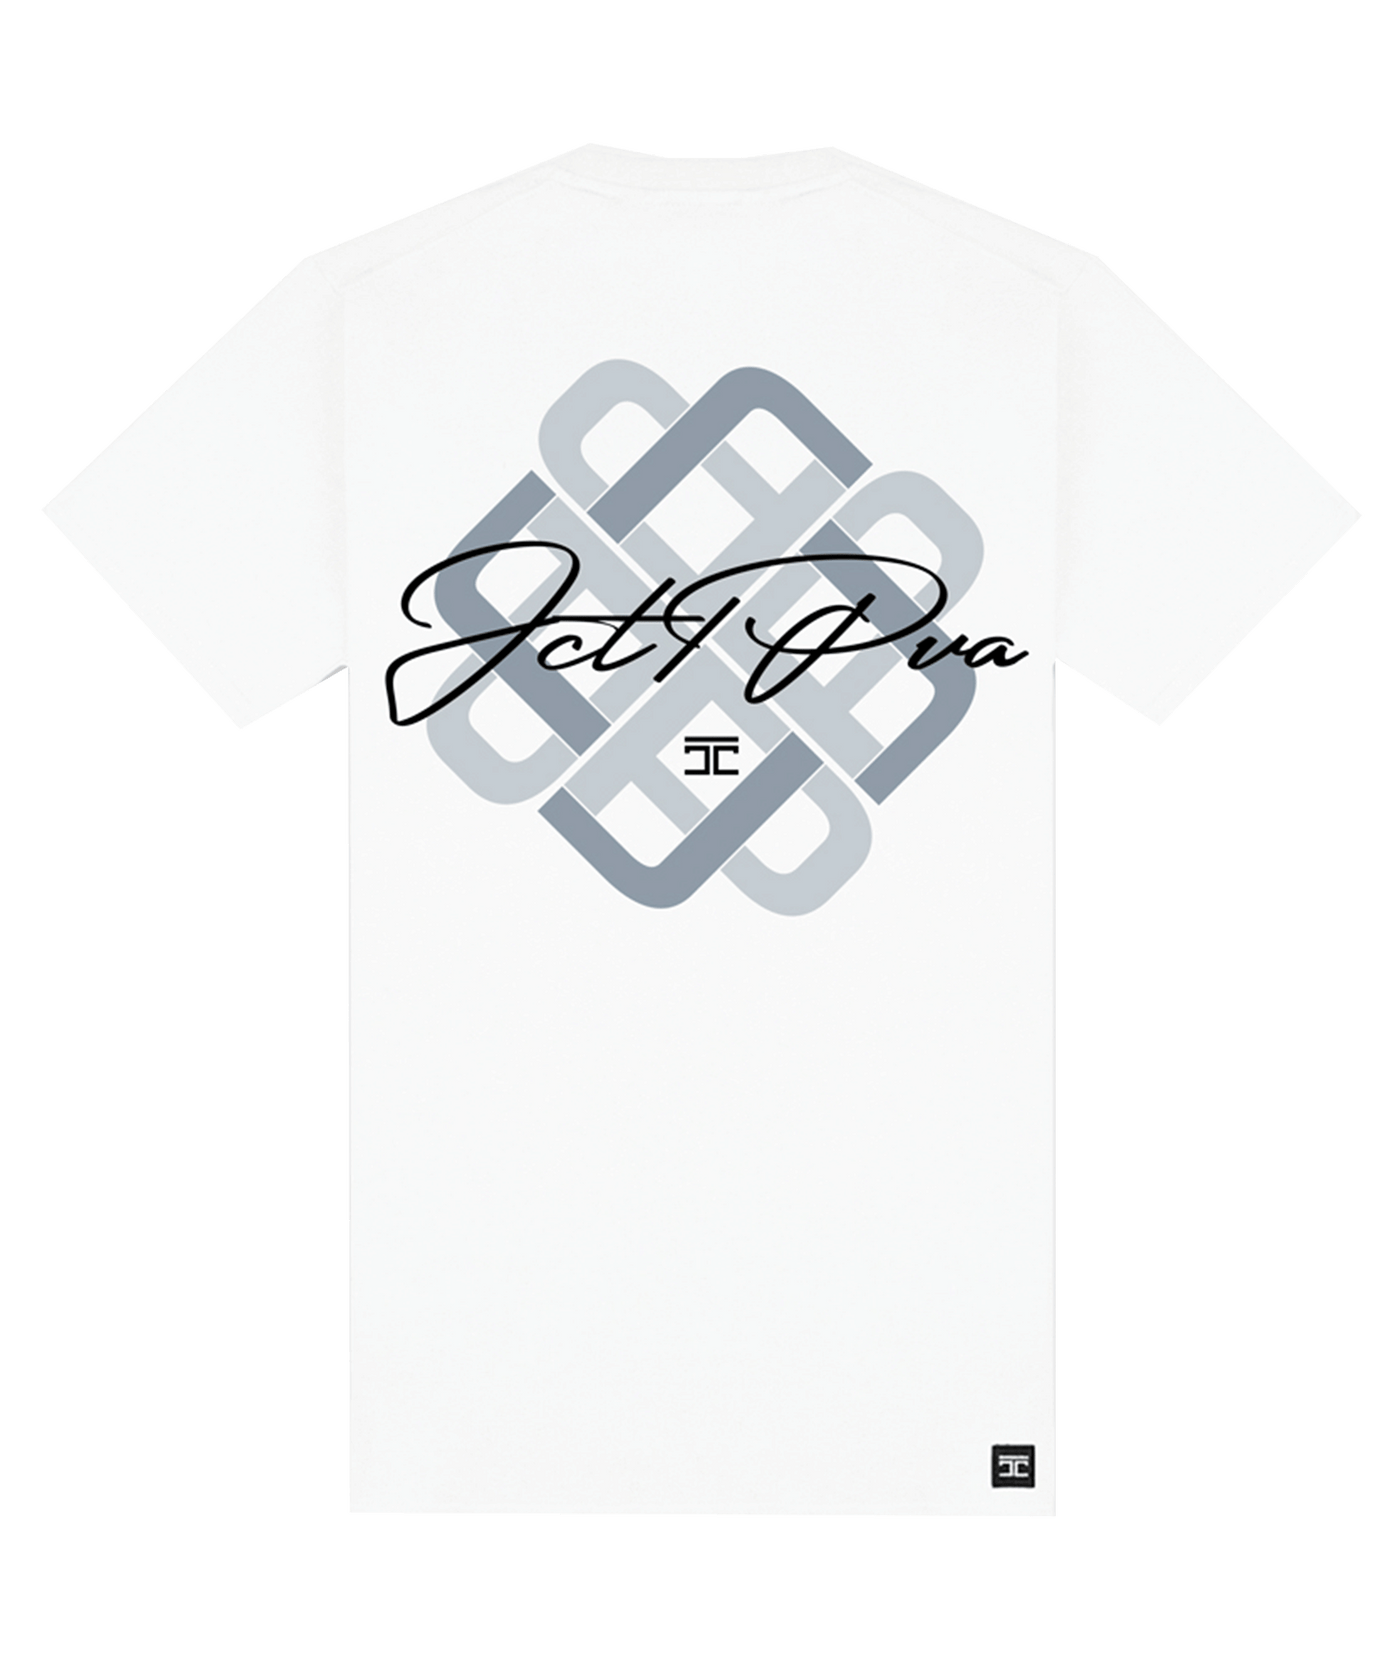 JorCustom - Jctpva - Slim Fit T-shirt - White